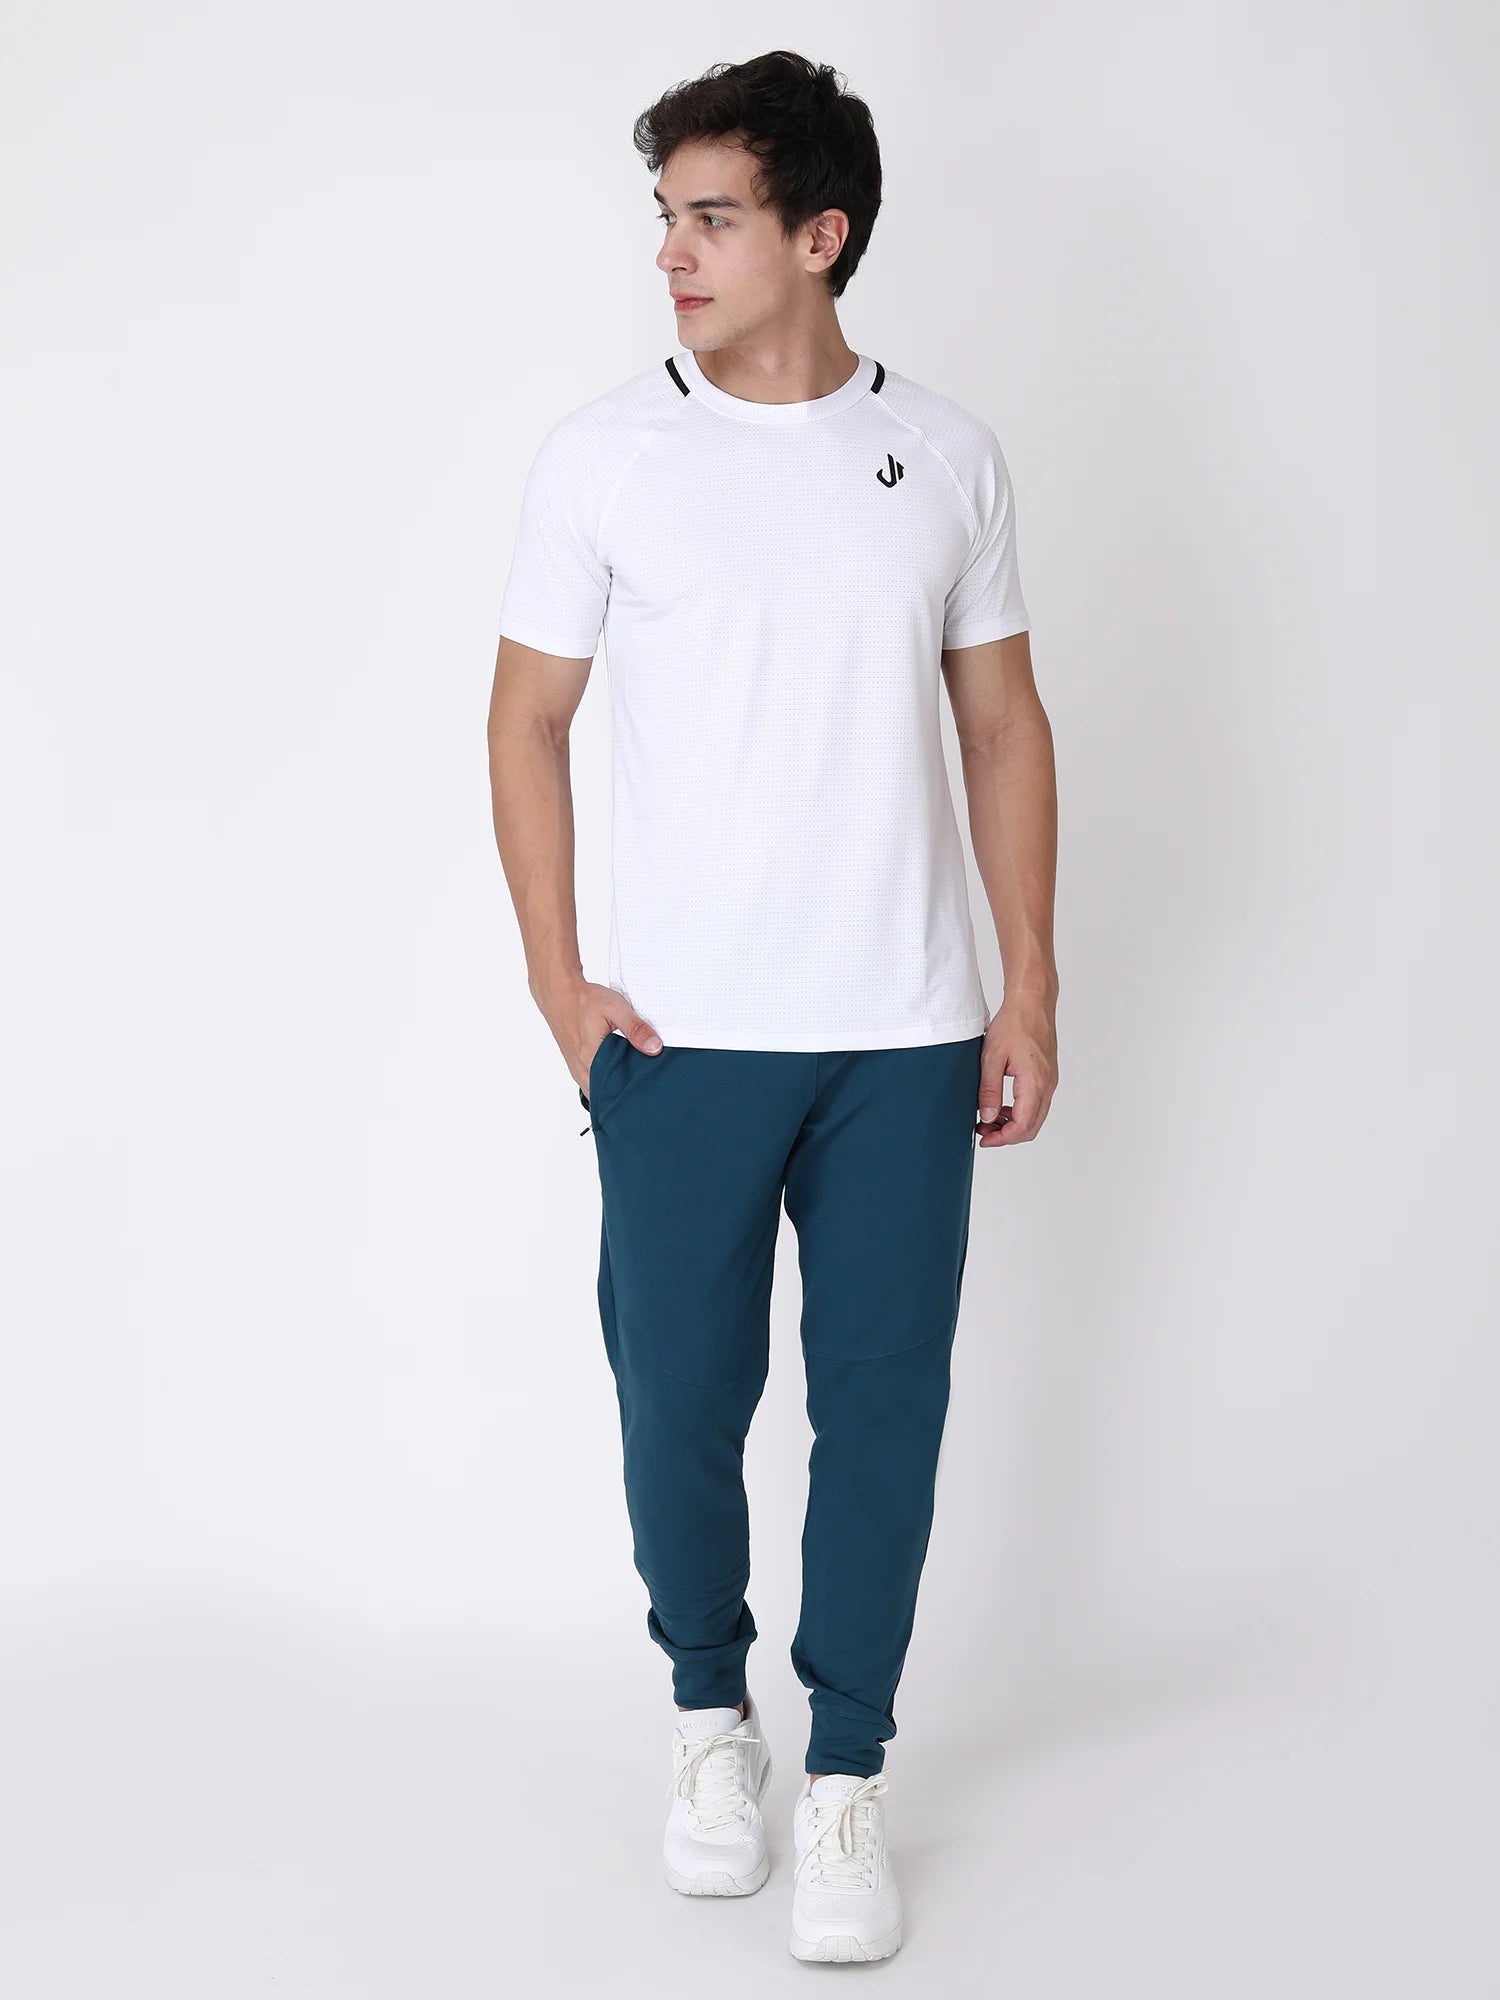 Original Brand COMBO - Men's Round Neck T-shirt + Track Pants